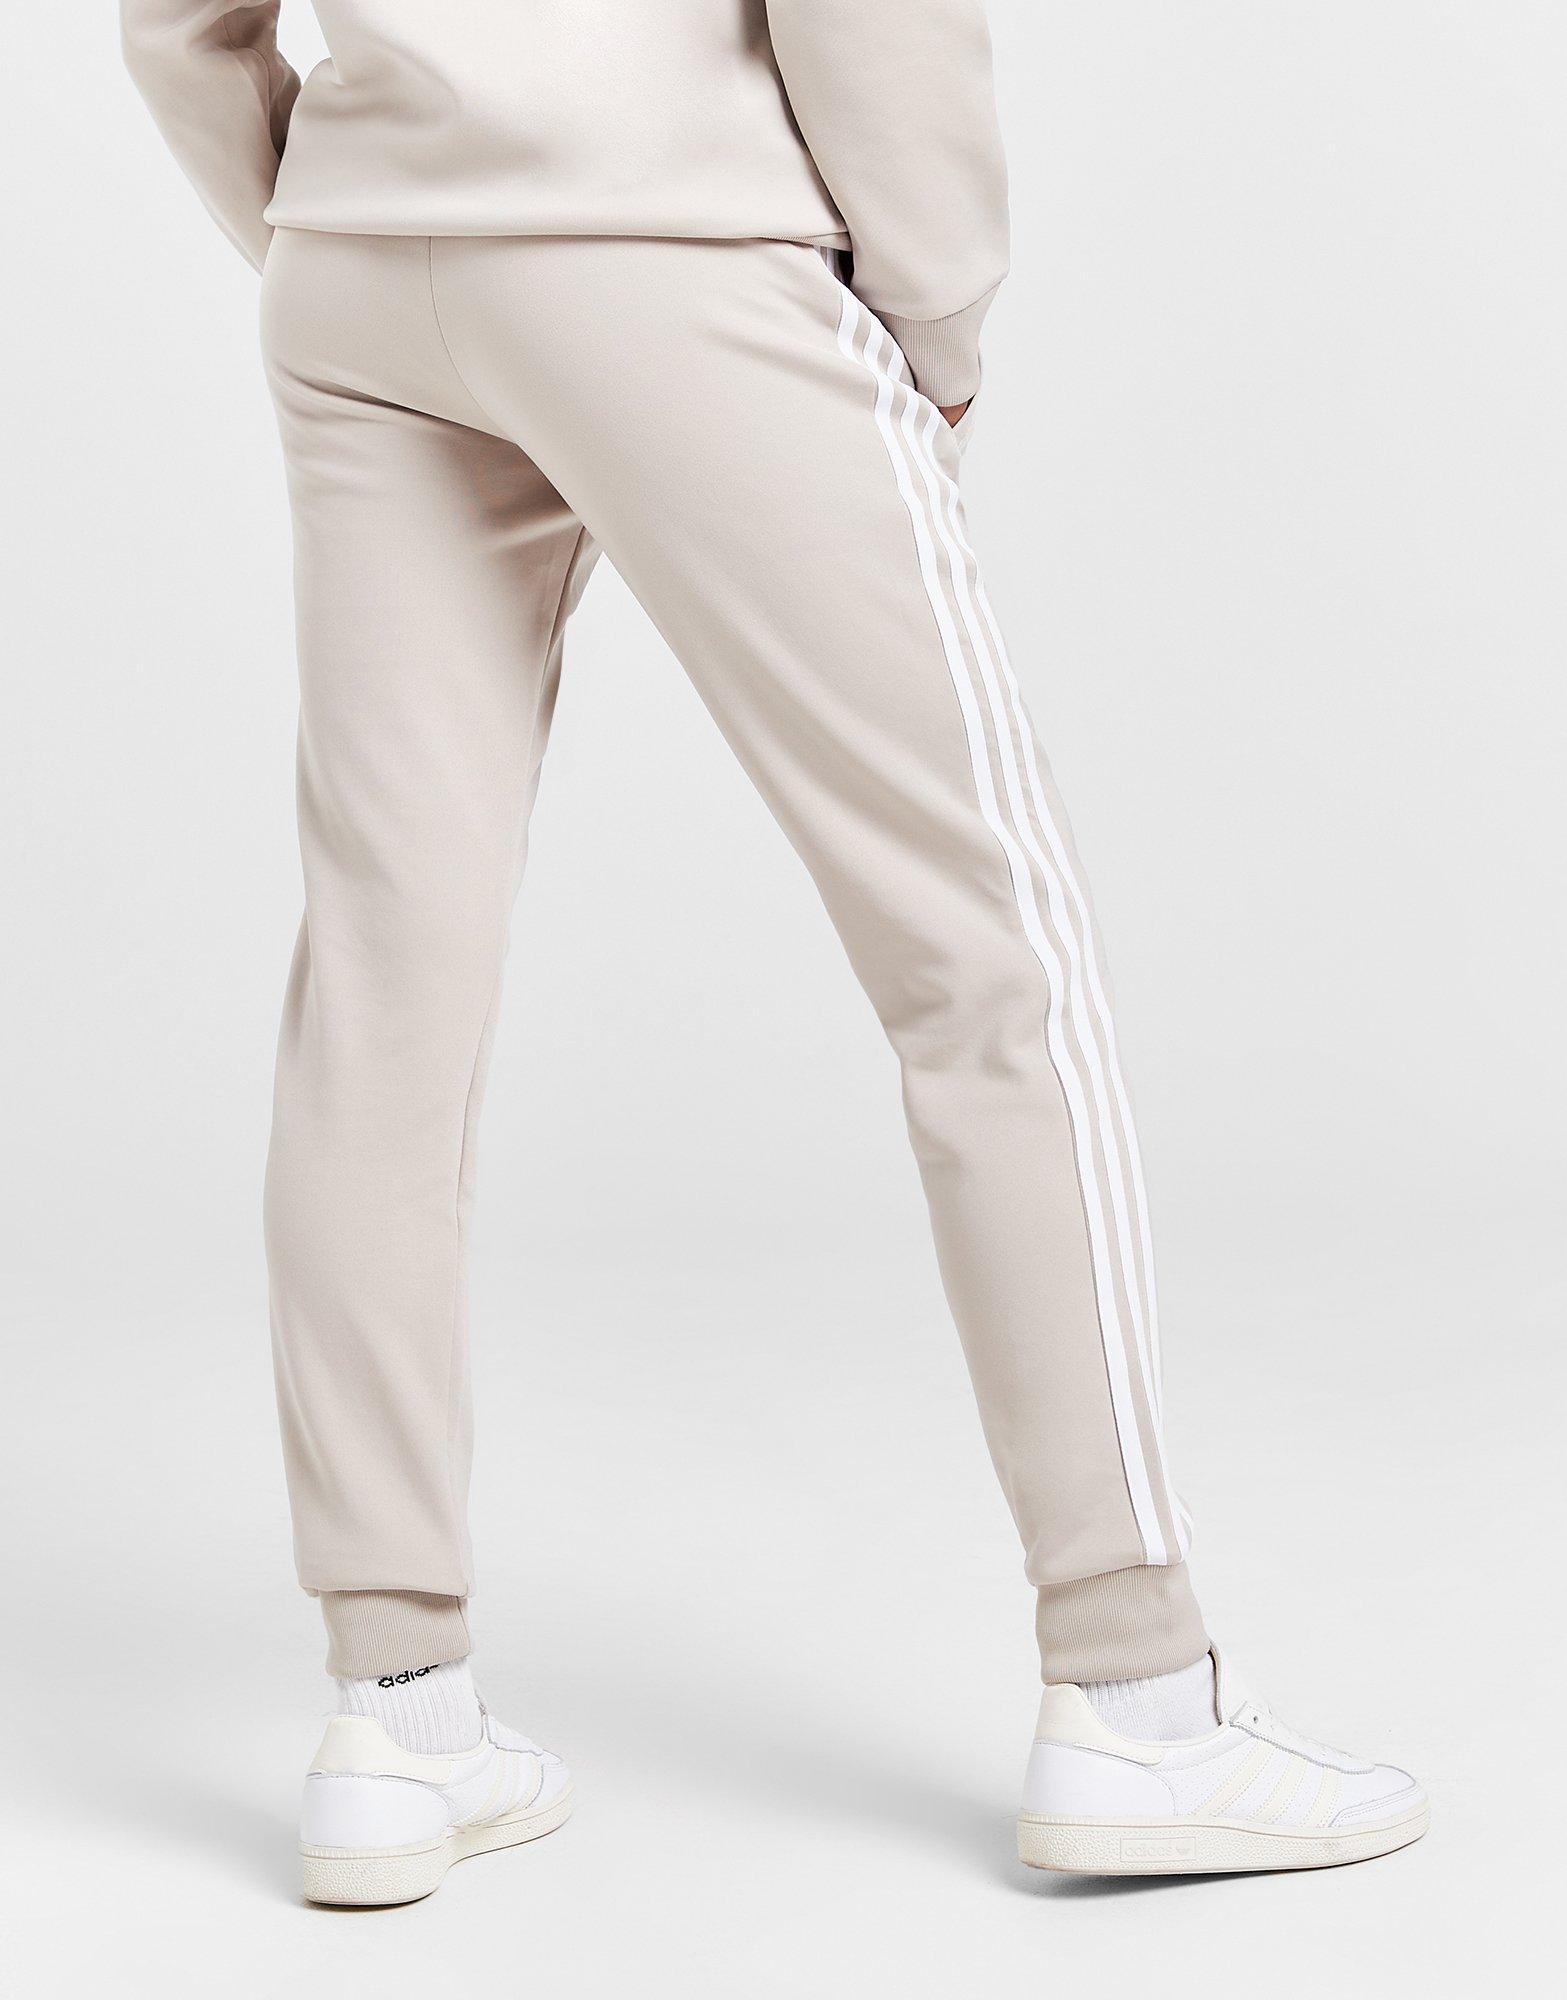 Brown adidas Originals Superstar Track Pants - JD Sports NZ